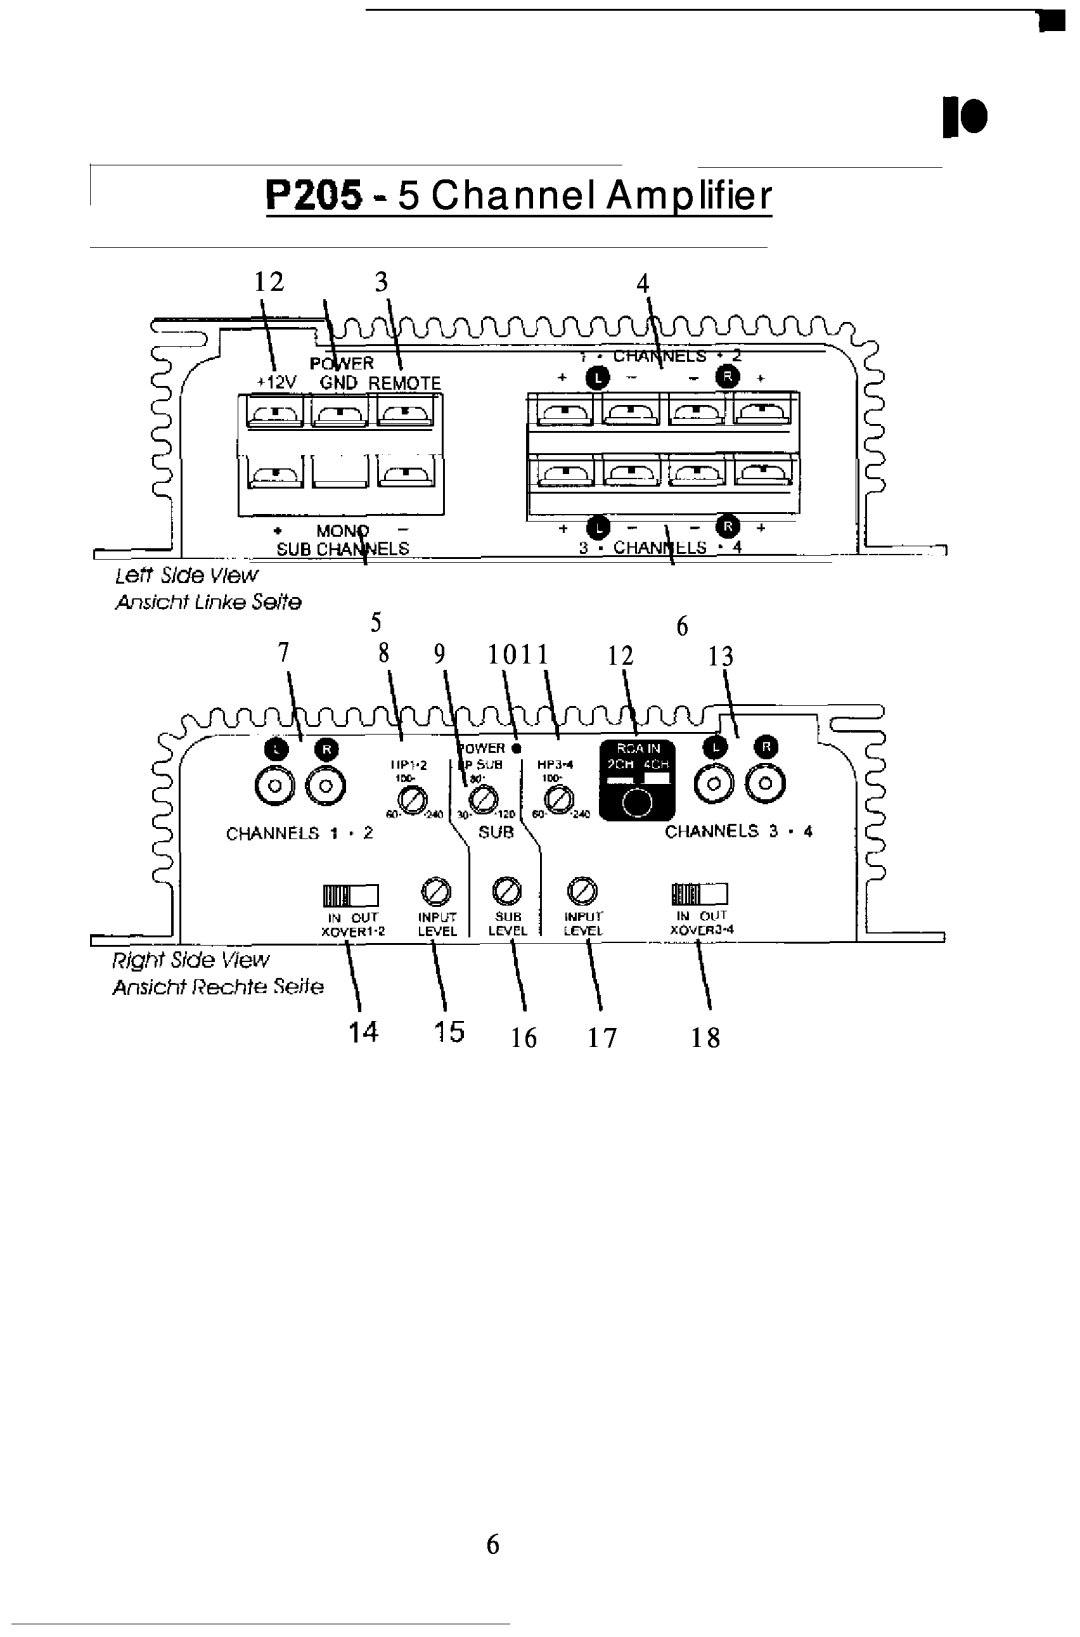 Soundstream Technologies P203 owner manual P205 - 5 Channel Amplifier, 1011, Len s&k? “k?W, Ansicht Link Seite 